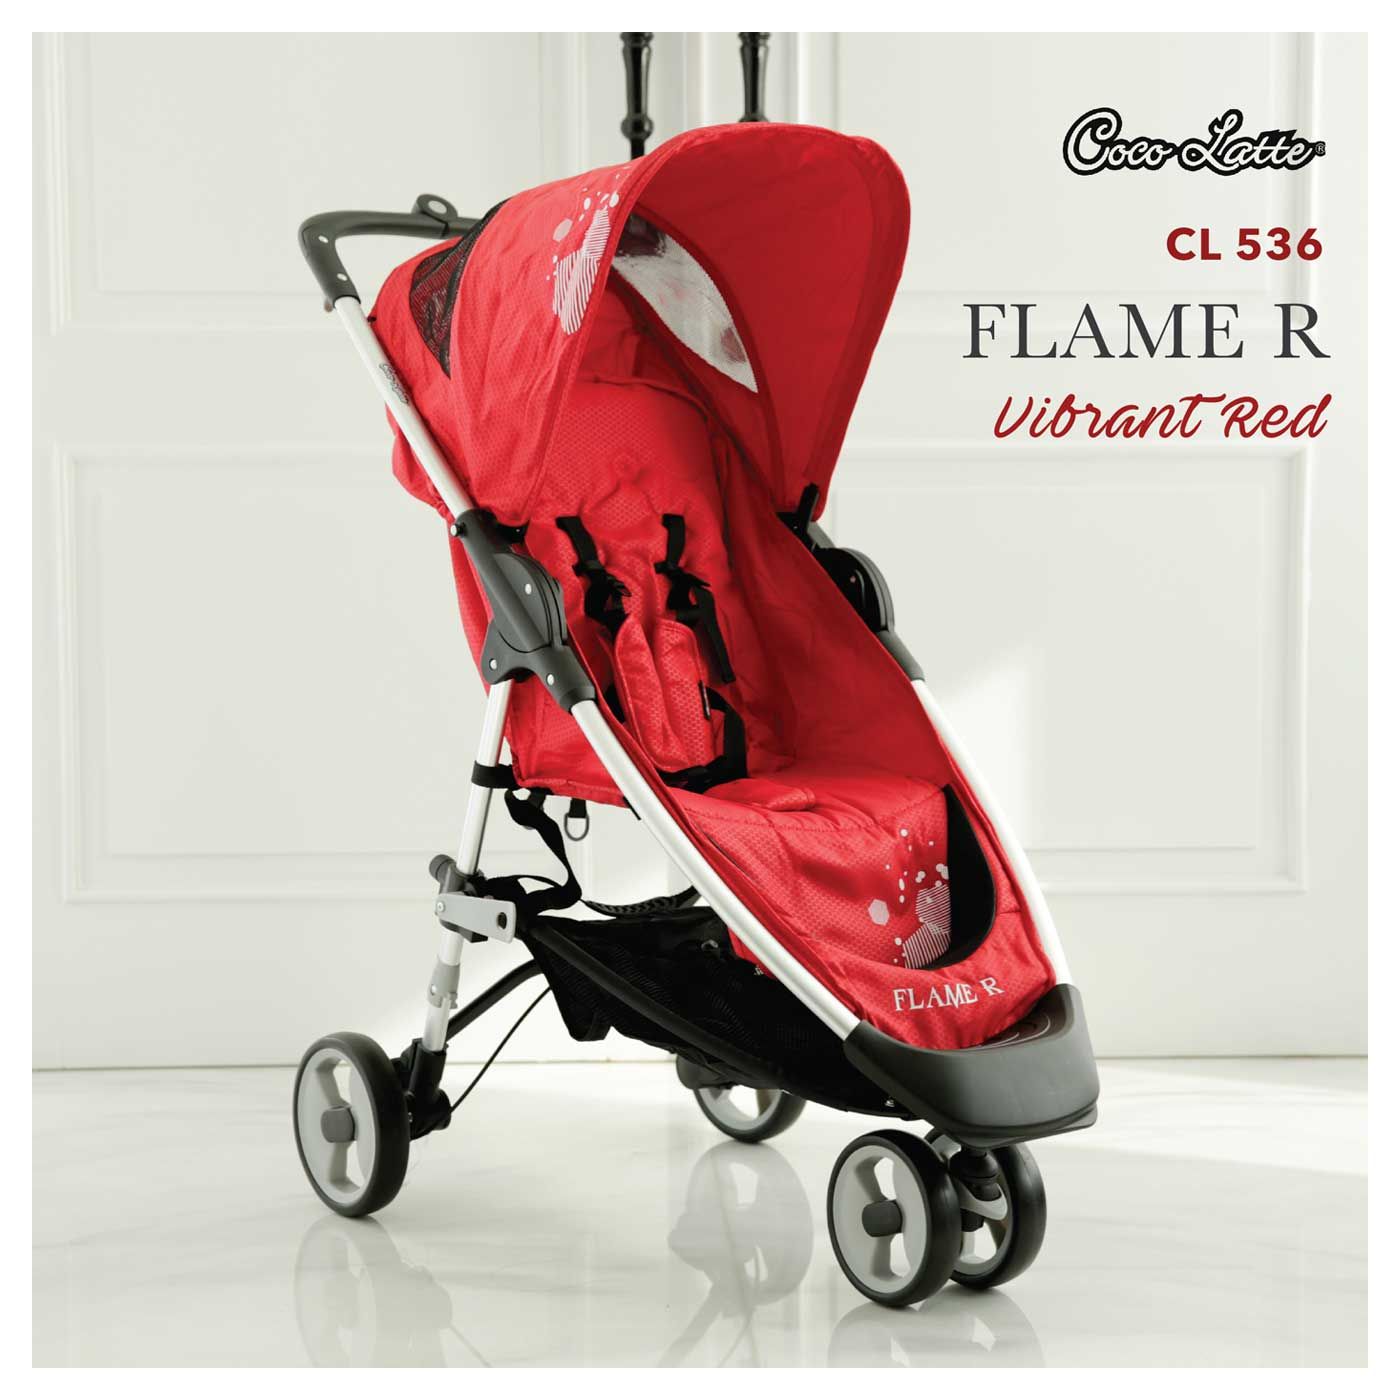 Cocolatte Stroller CL 536 Flame R- Vibrant Red - 1